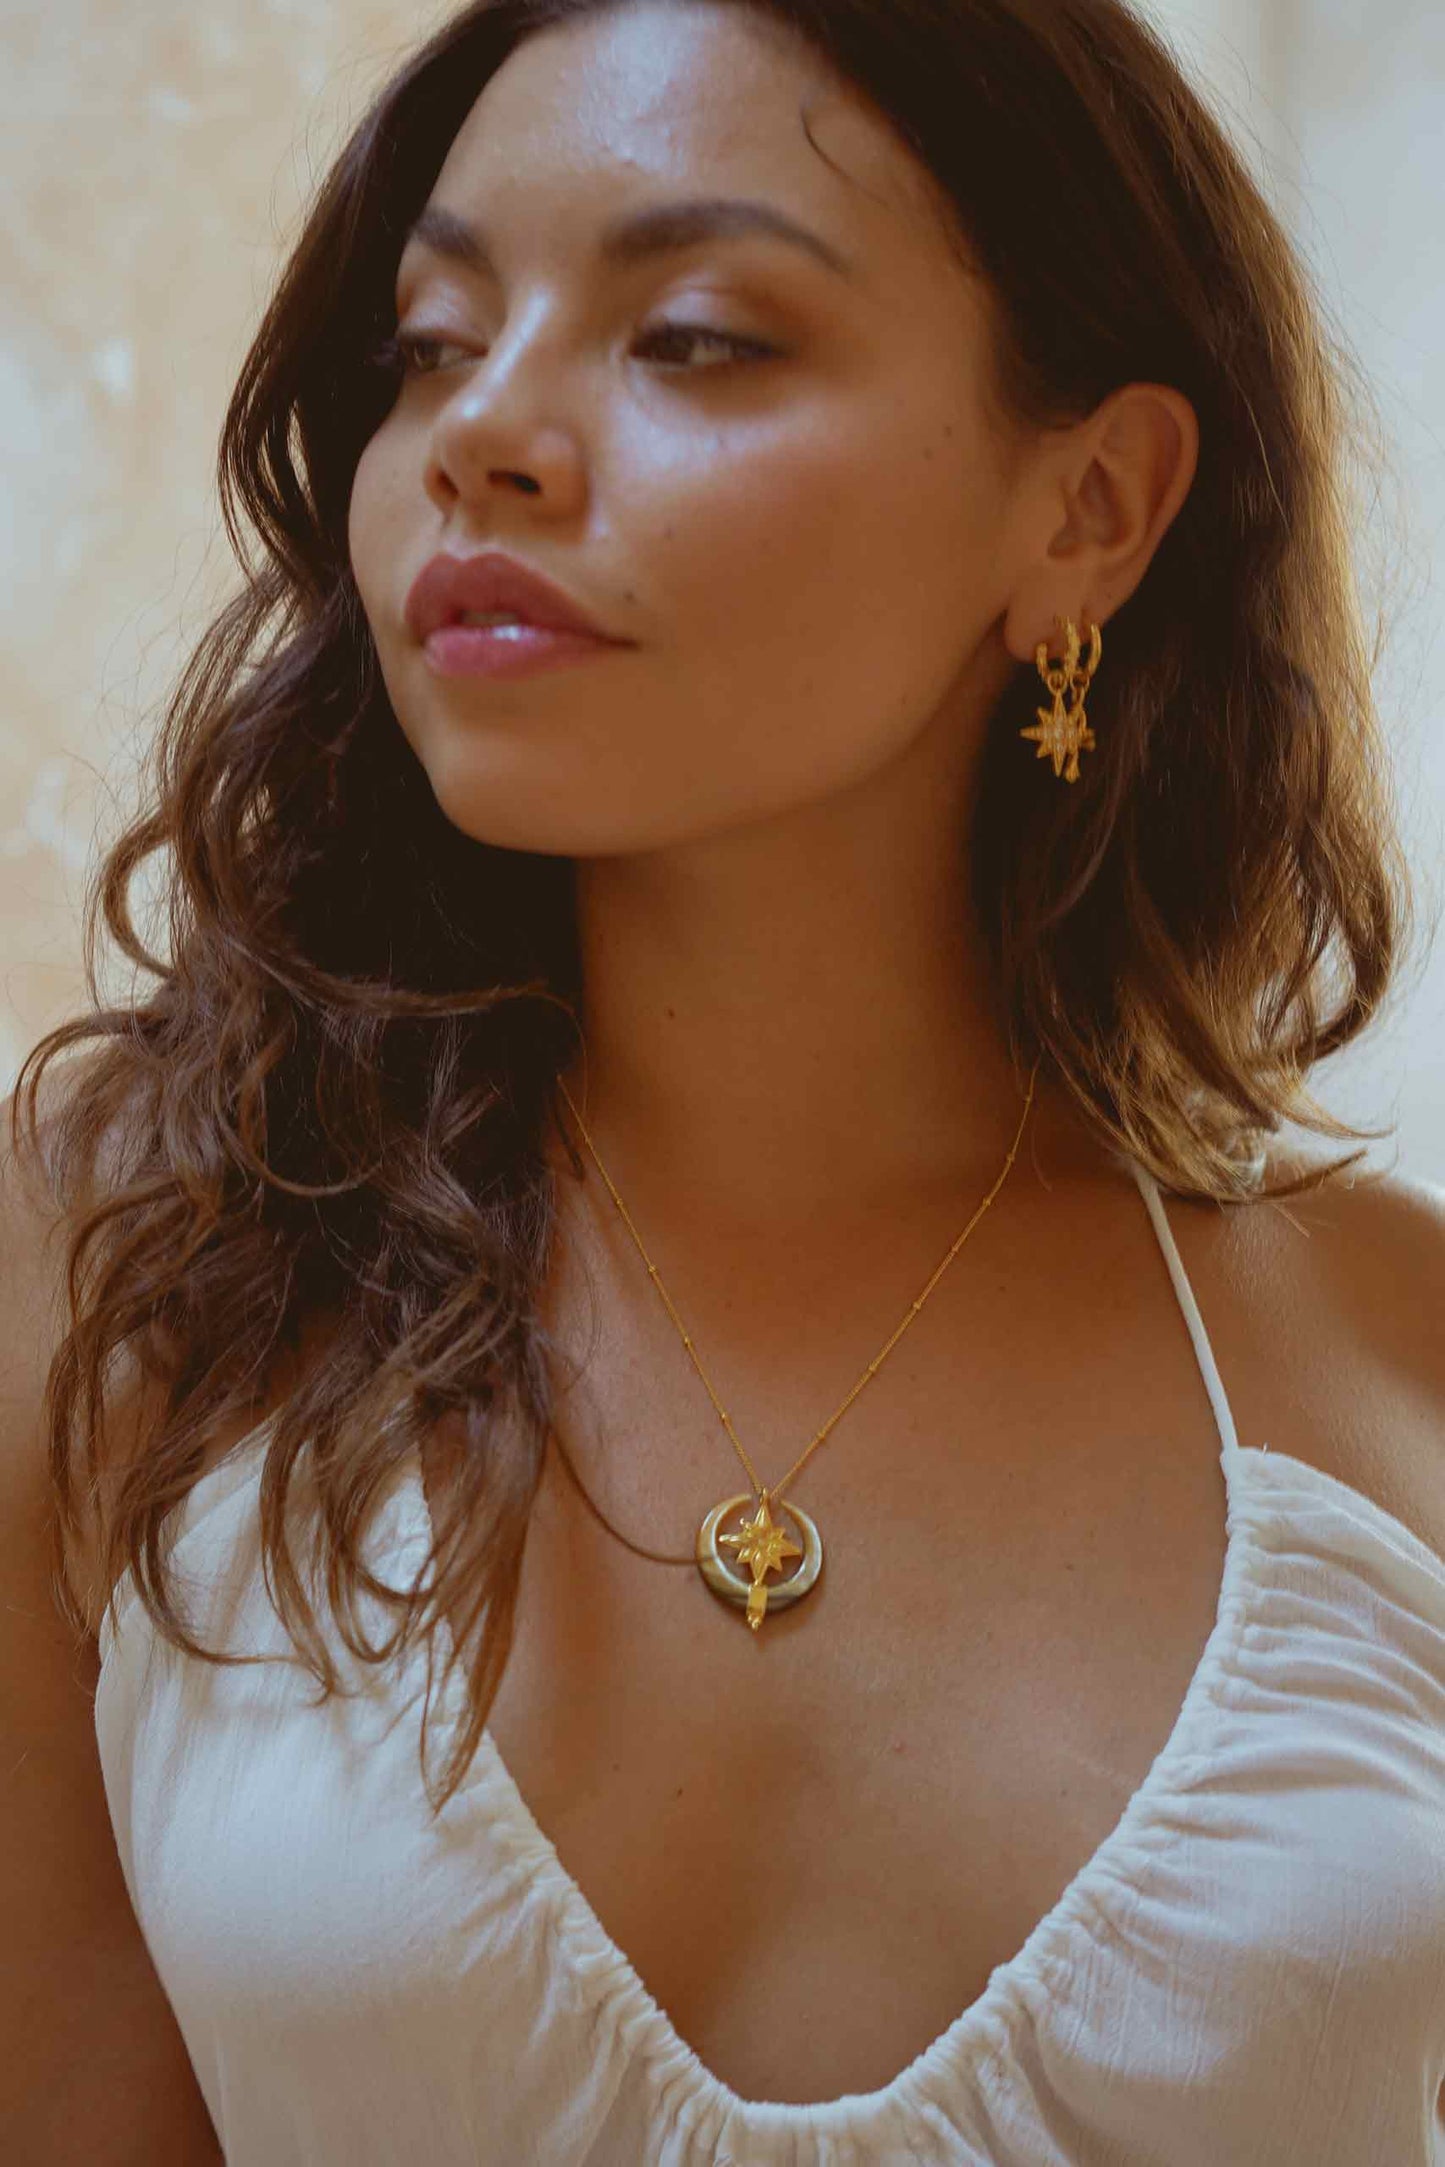 Ishtar Moon & Star Necklace